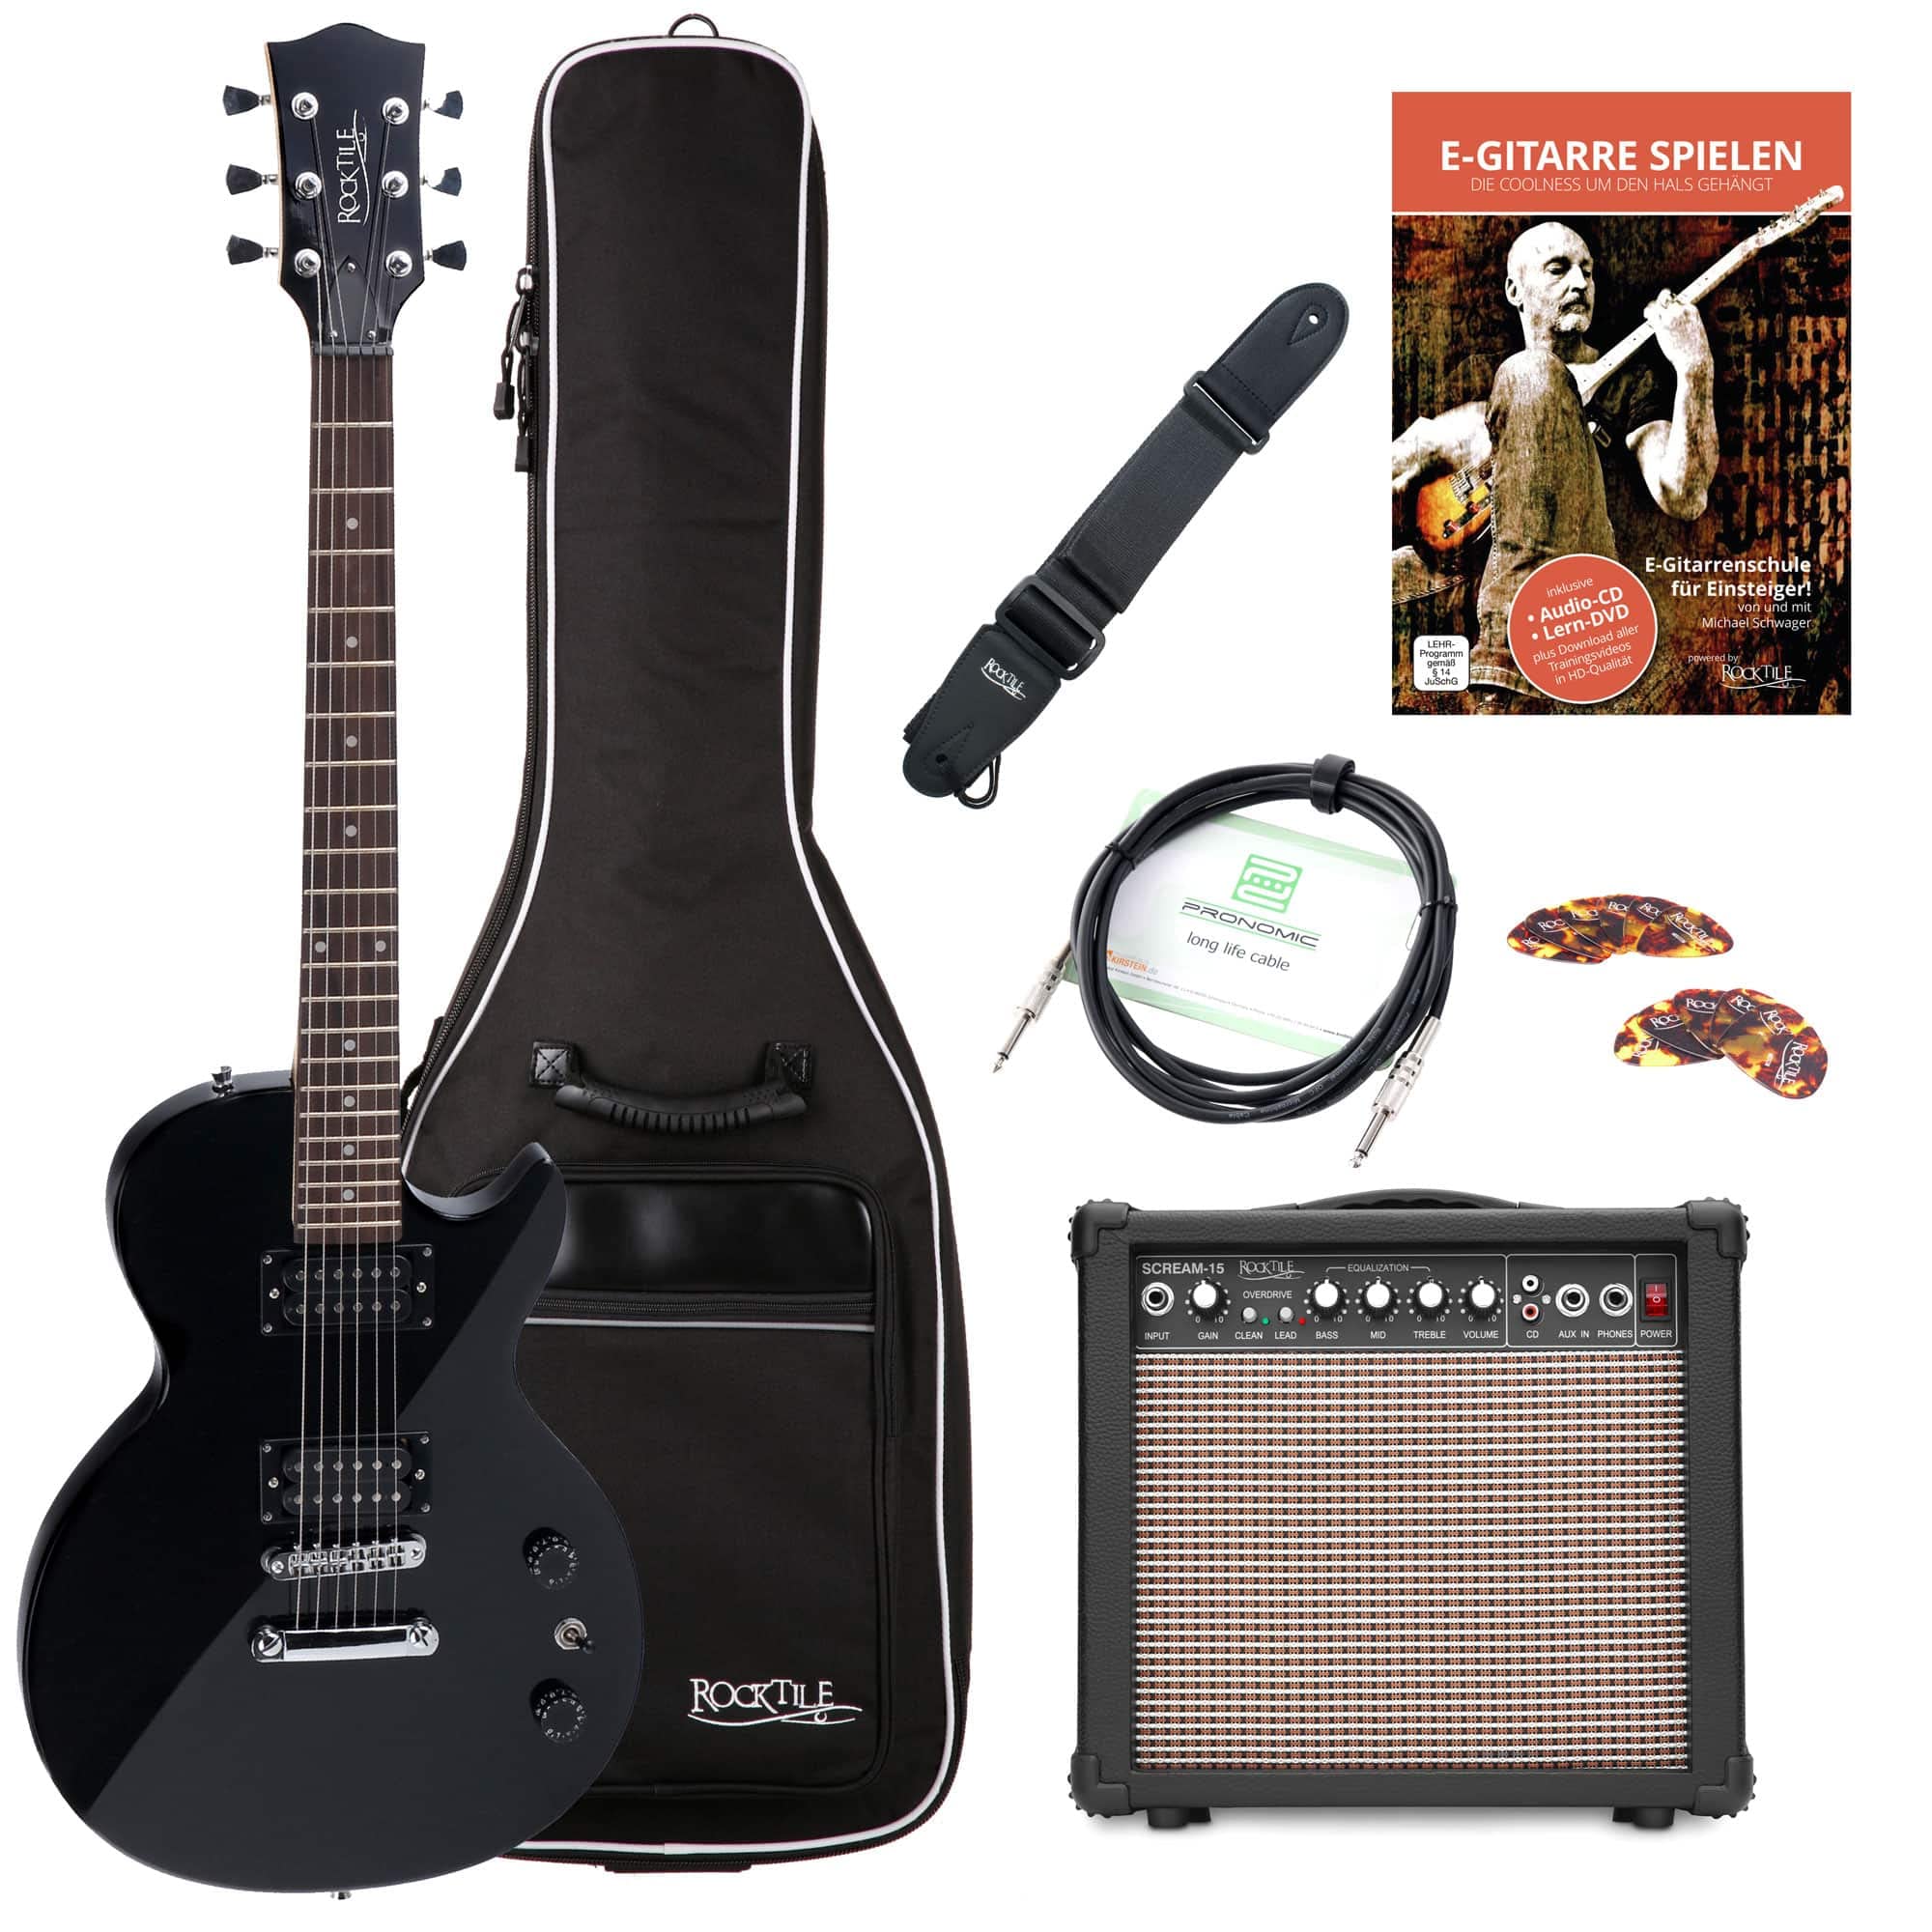 Rocktile L-100 BL E-Gitarre schwarz Starter Set - Single Cut-Modell - Korpus: Linde - 2x Humbucker Tonabnehmer - inklusive Verstärker, Gigbag, Kabel, Picks, Gurt und Schule - Schwarz